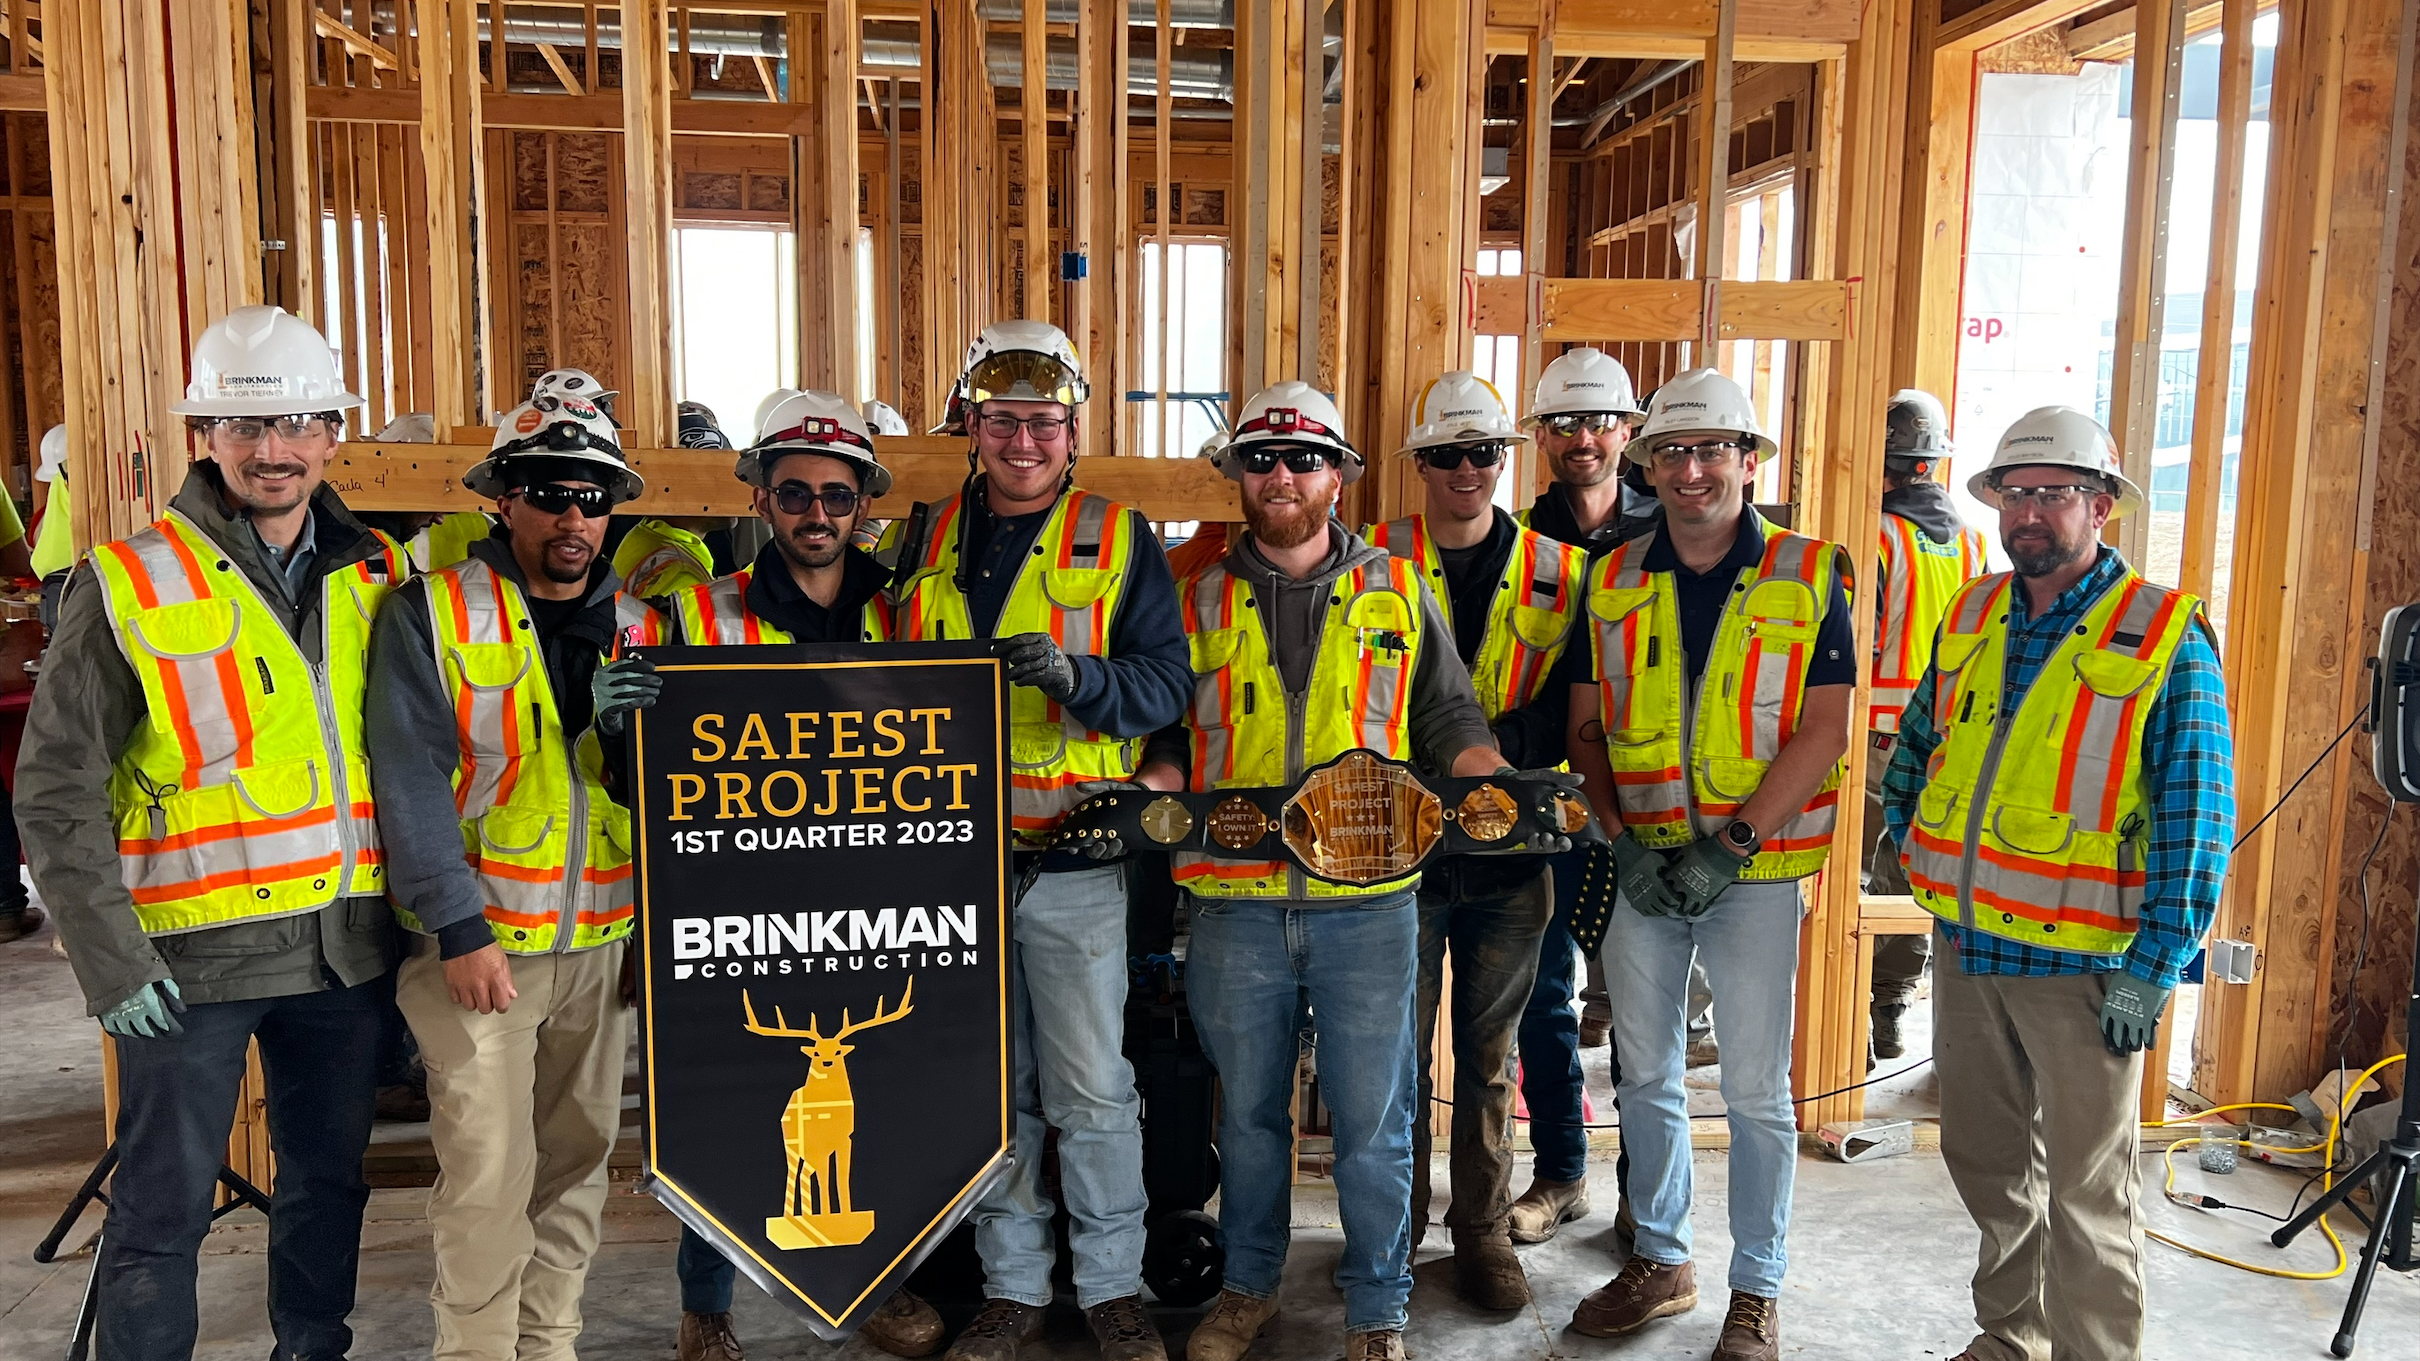 Brinkman Construction | Safest Project Award Q1